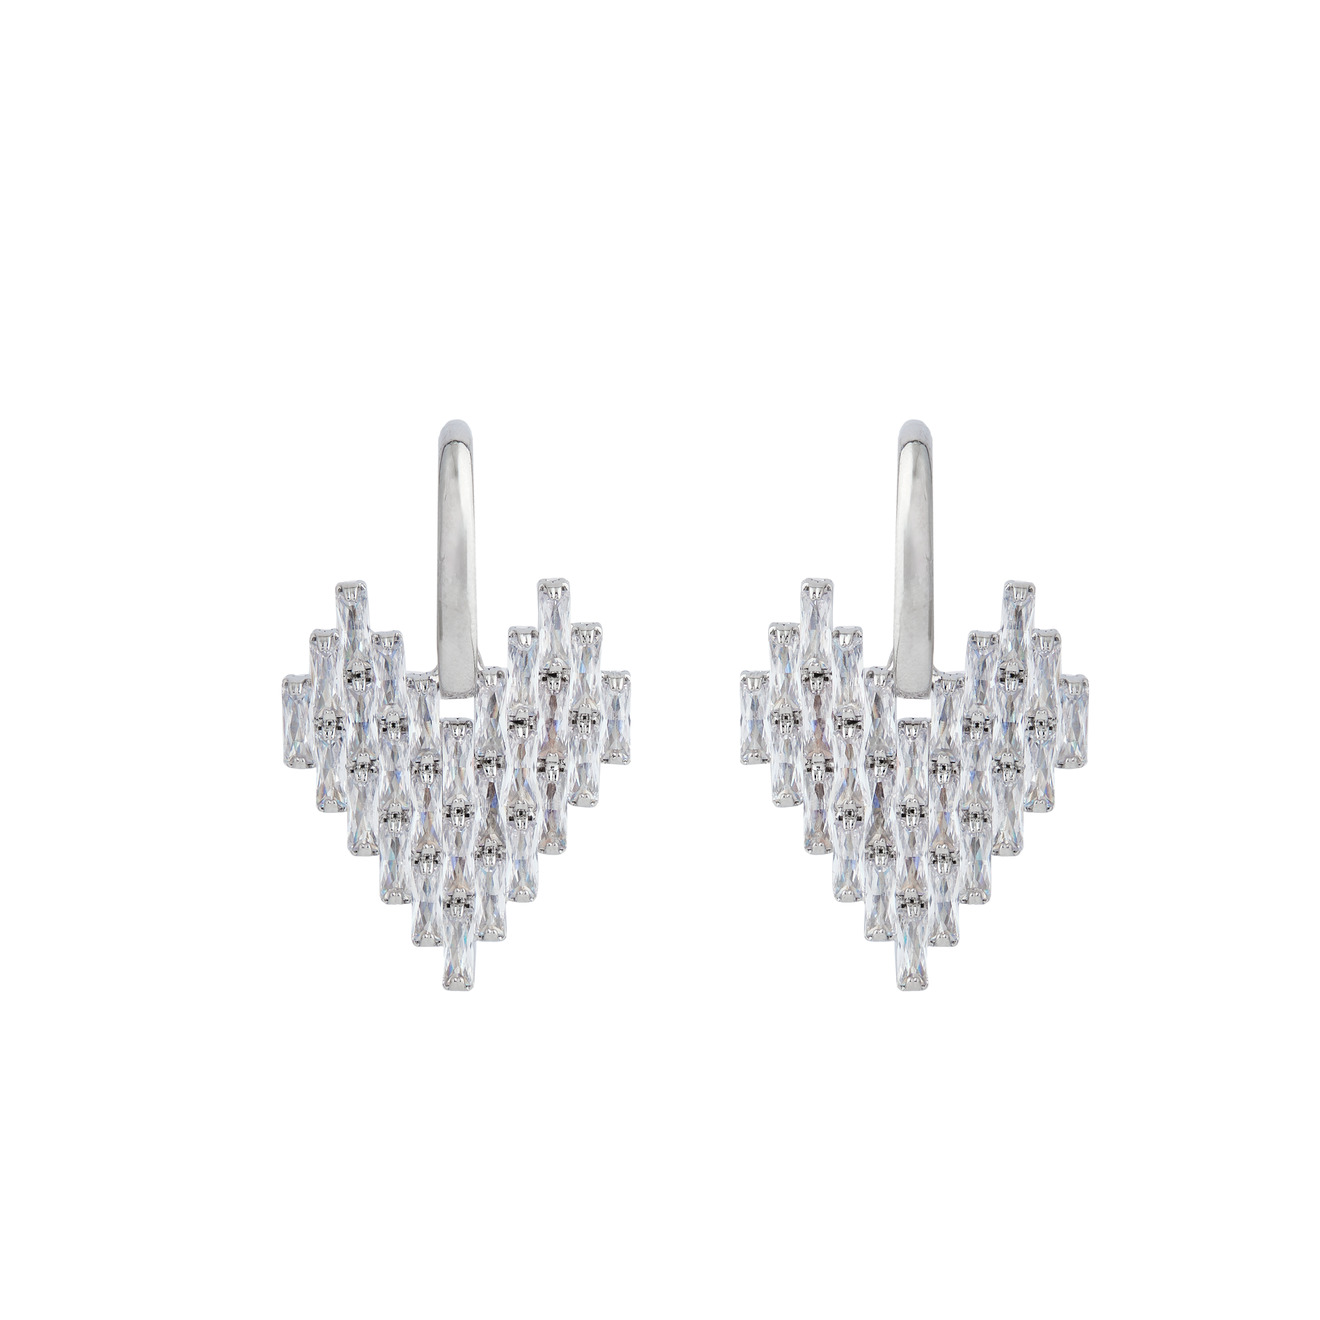 Herald Percy Серебристые серьги-сердца с багетами кристаллов цена и фото